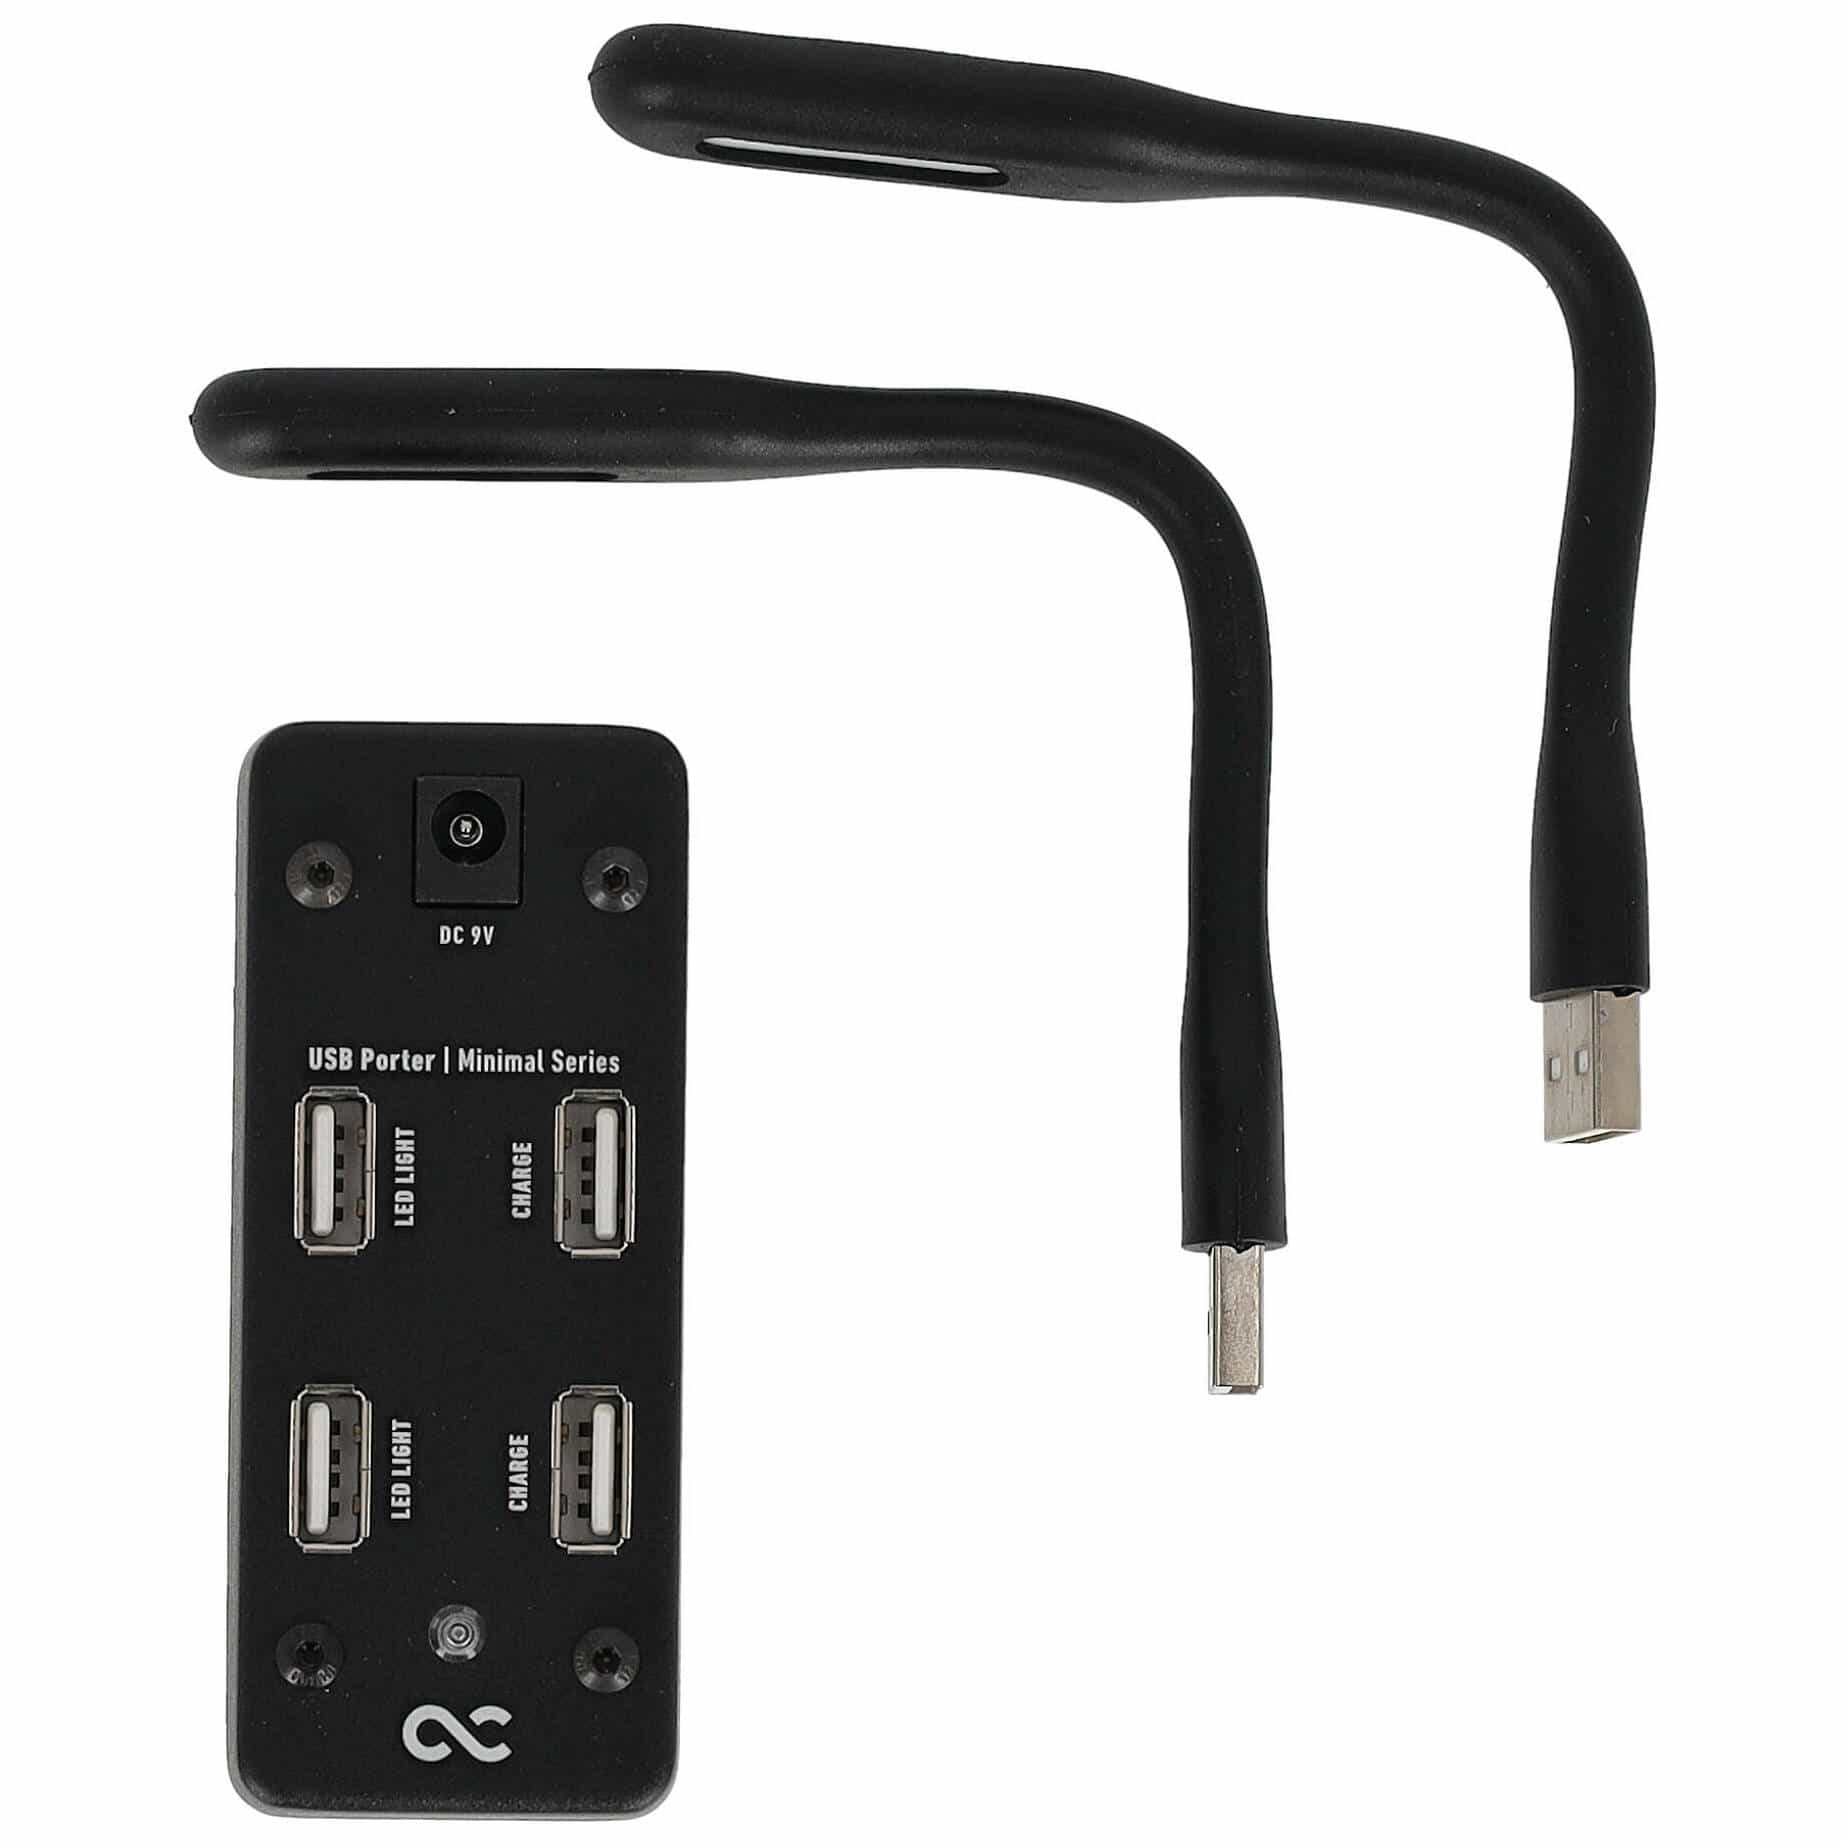 One Control Minimal Series USB Porter 5